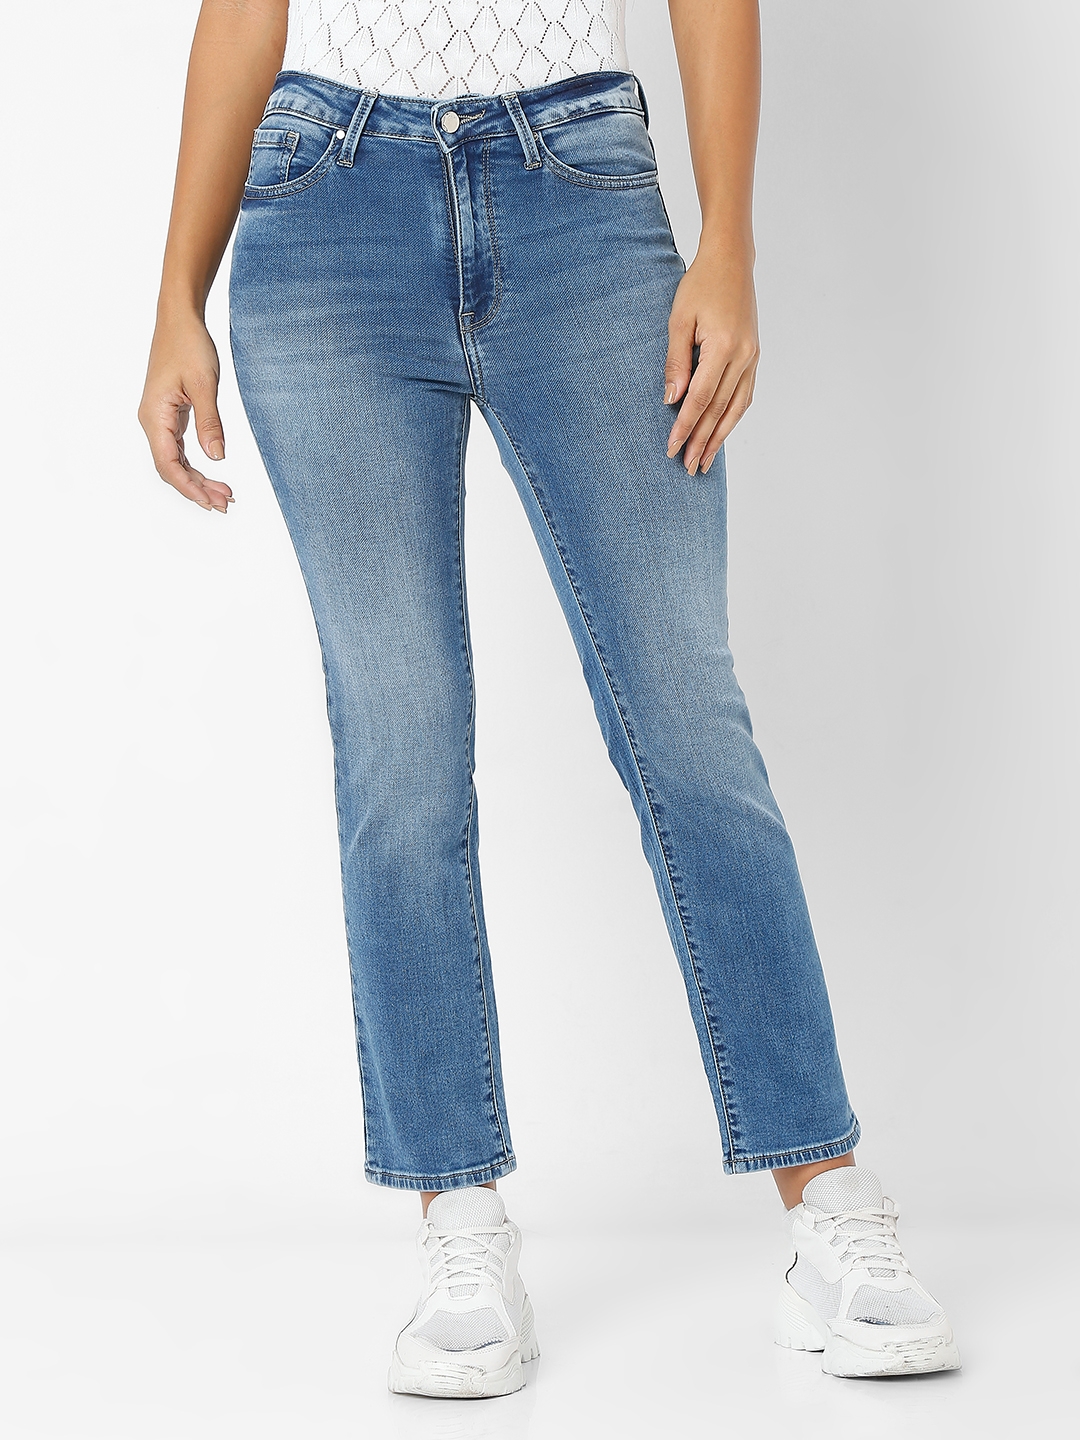 spykar | Women's Blue Cotton Solid Slim Jeans 0